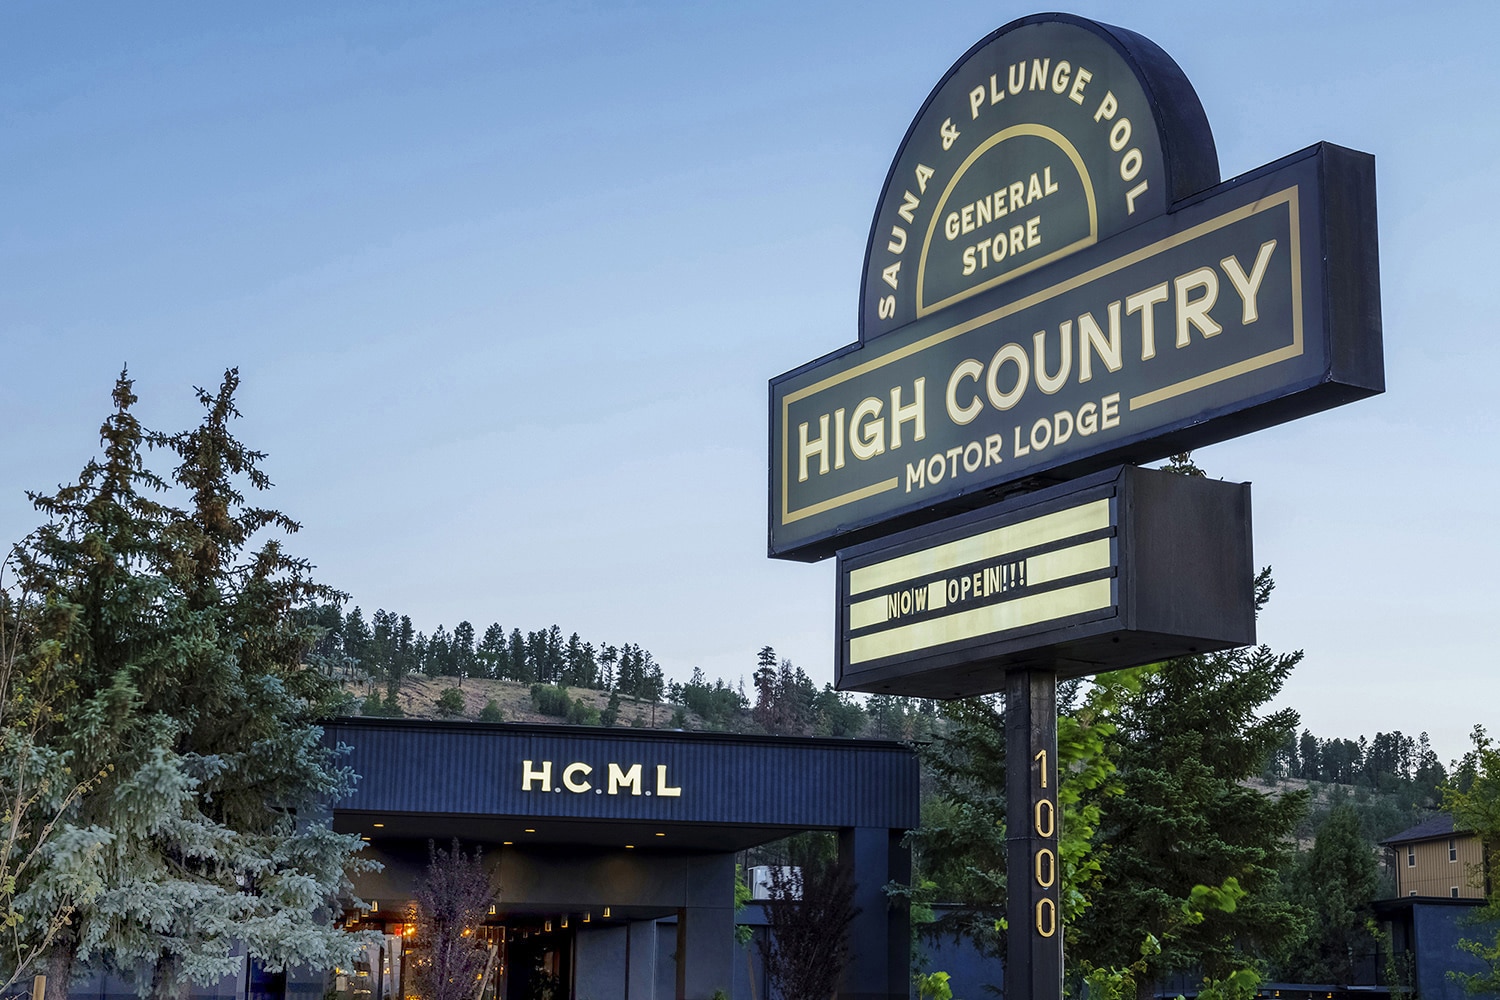 High Country Motor Lodge